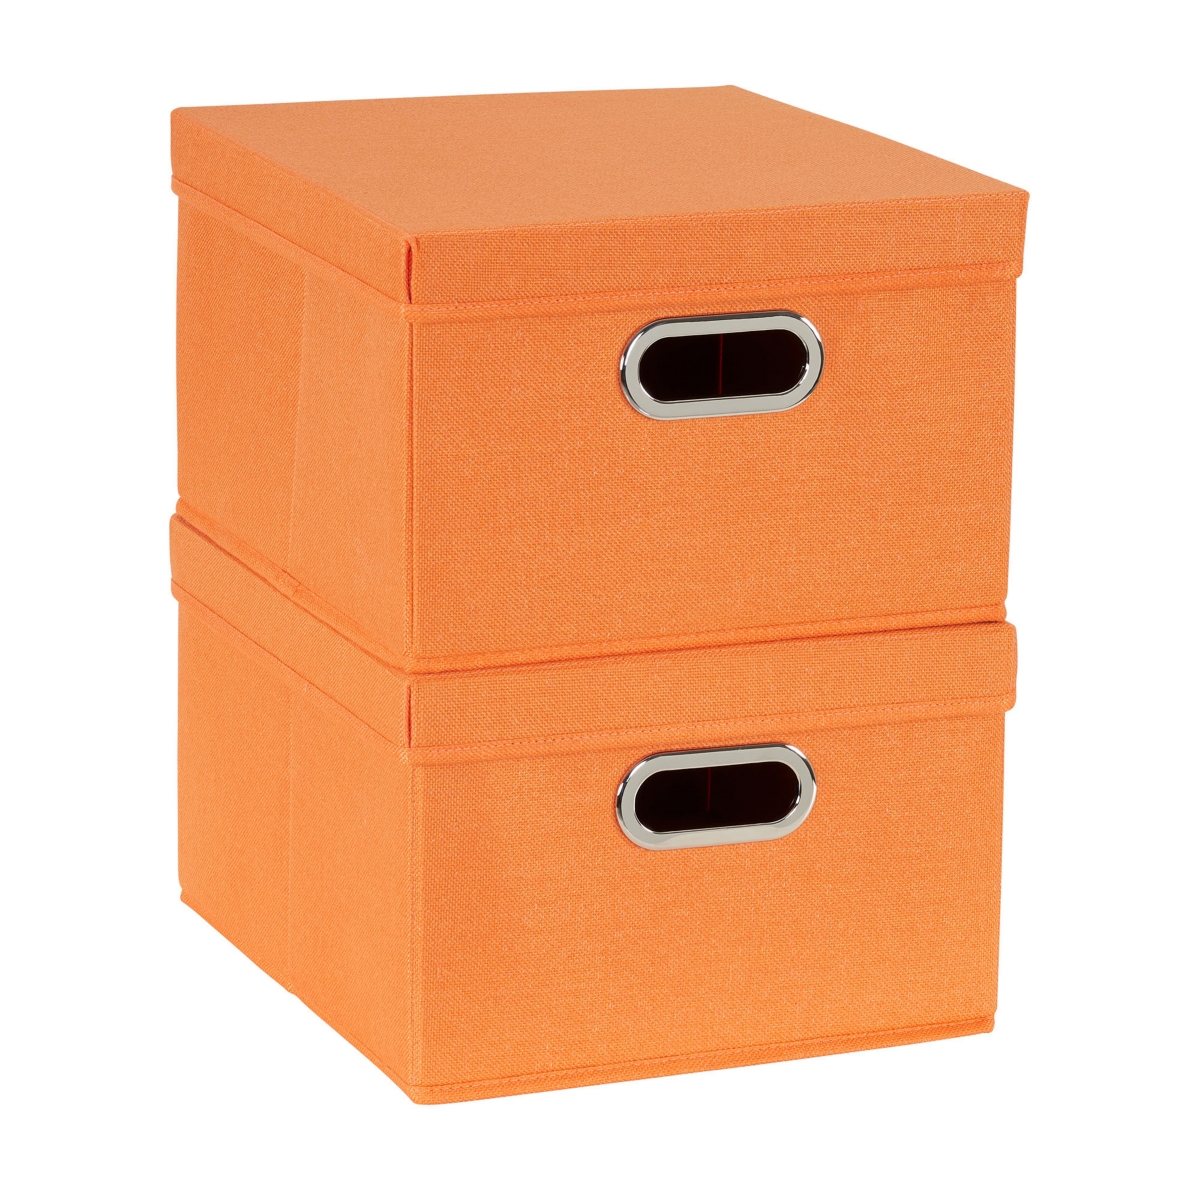 2-Pc. Tangarine Storage Box Set - Orange